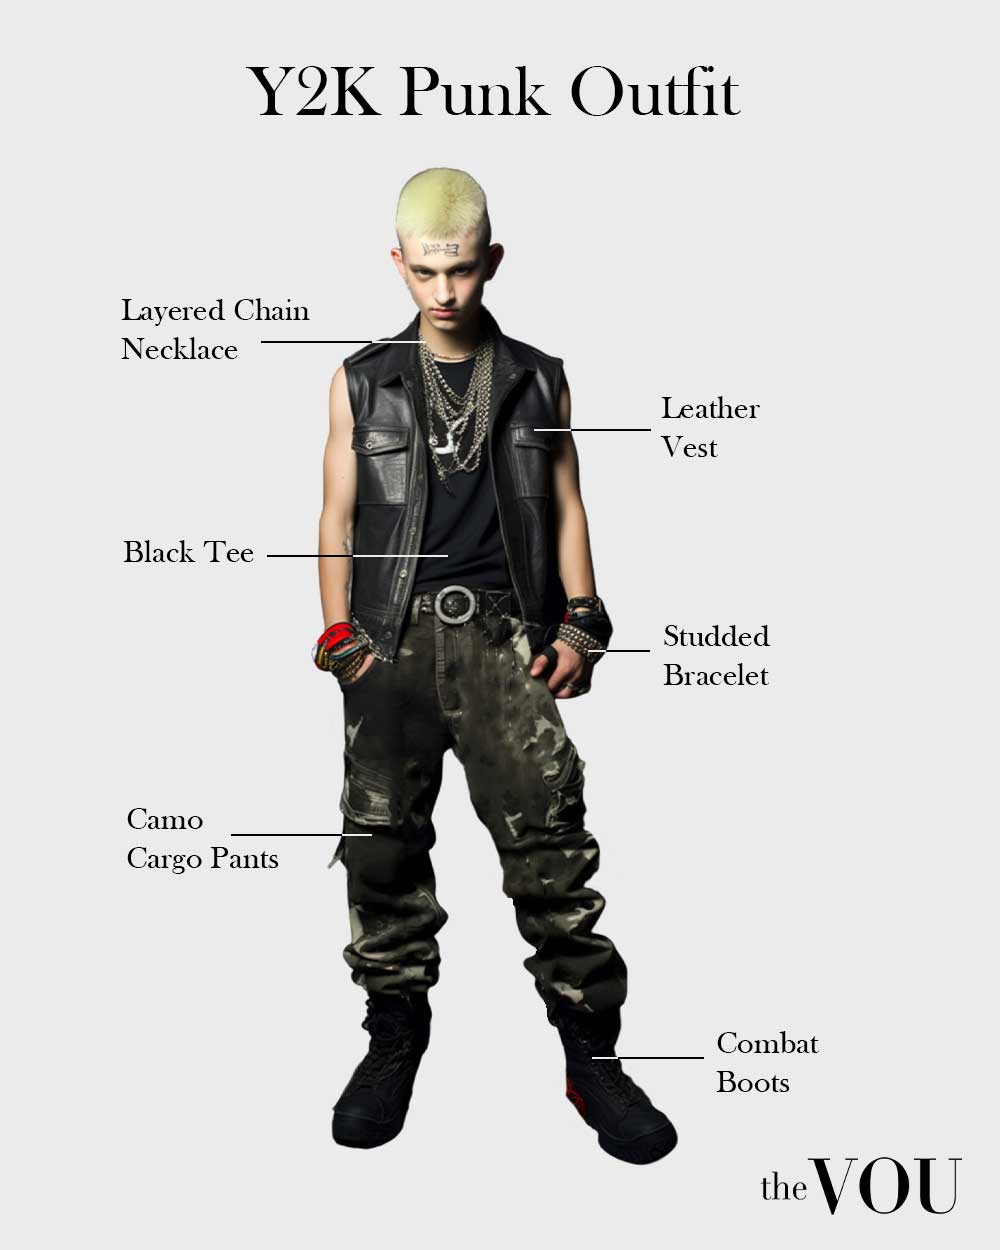 Y2K Punk outfit for men